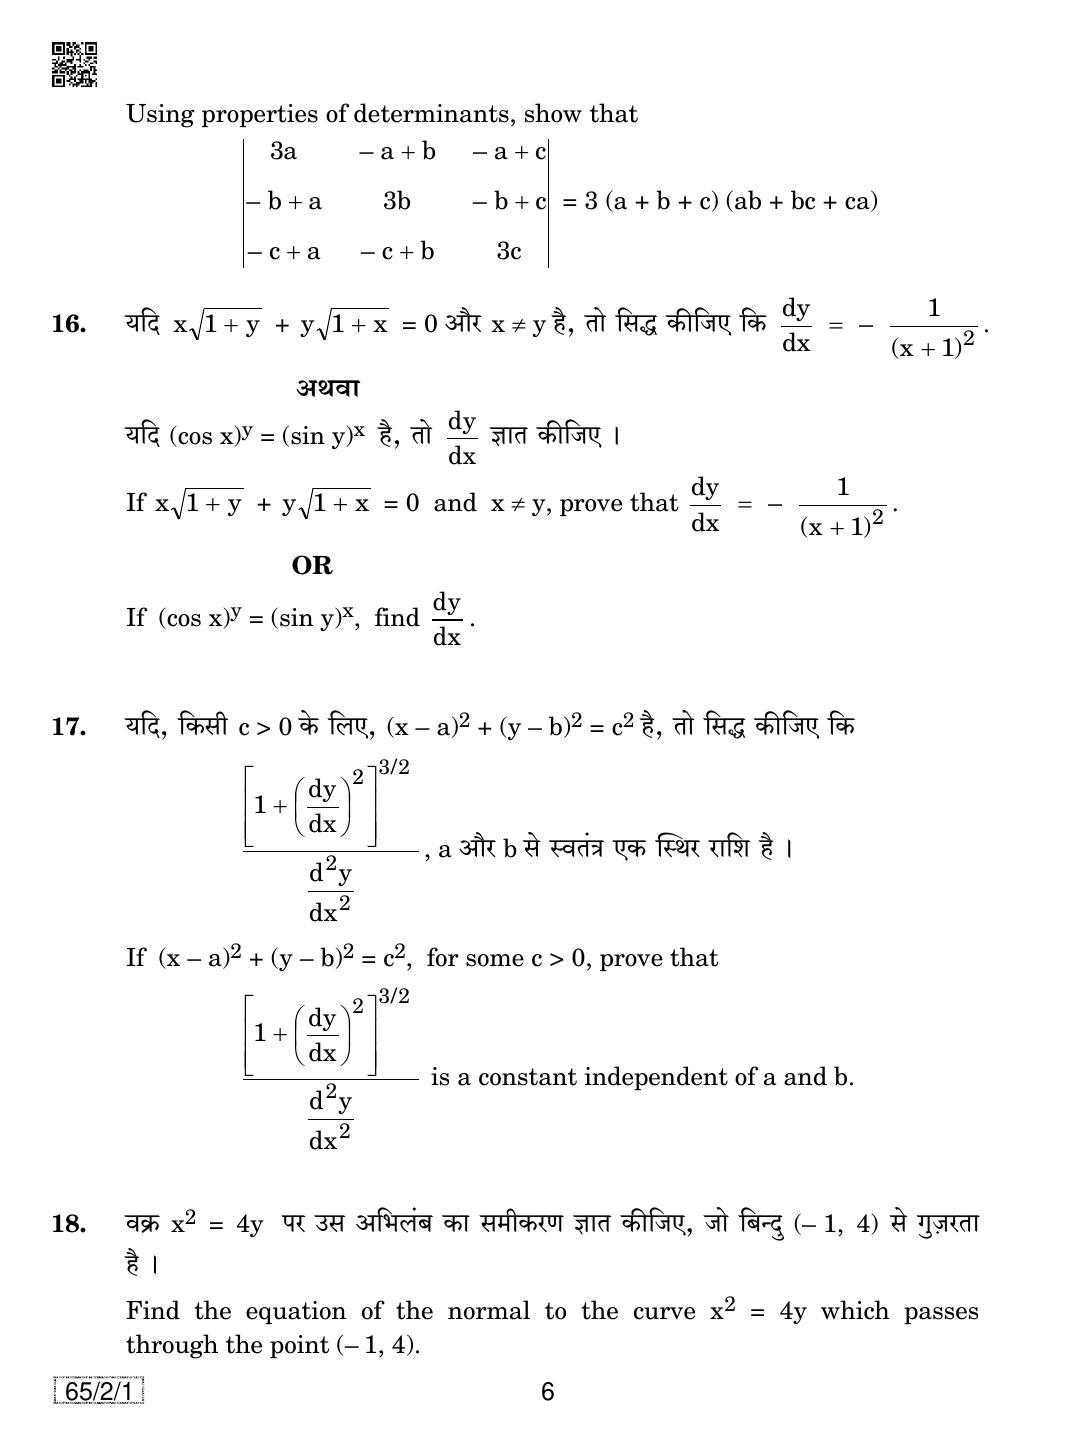 CBSE Class 12 65-2-1 Mathematics 2019 Question Paper - Page 6